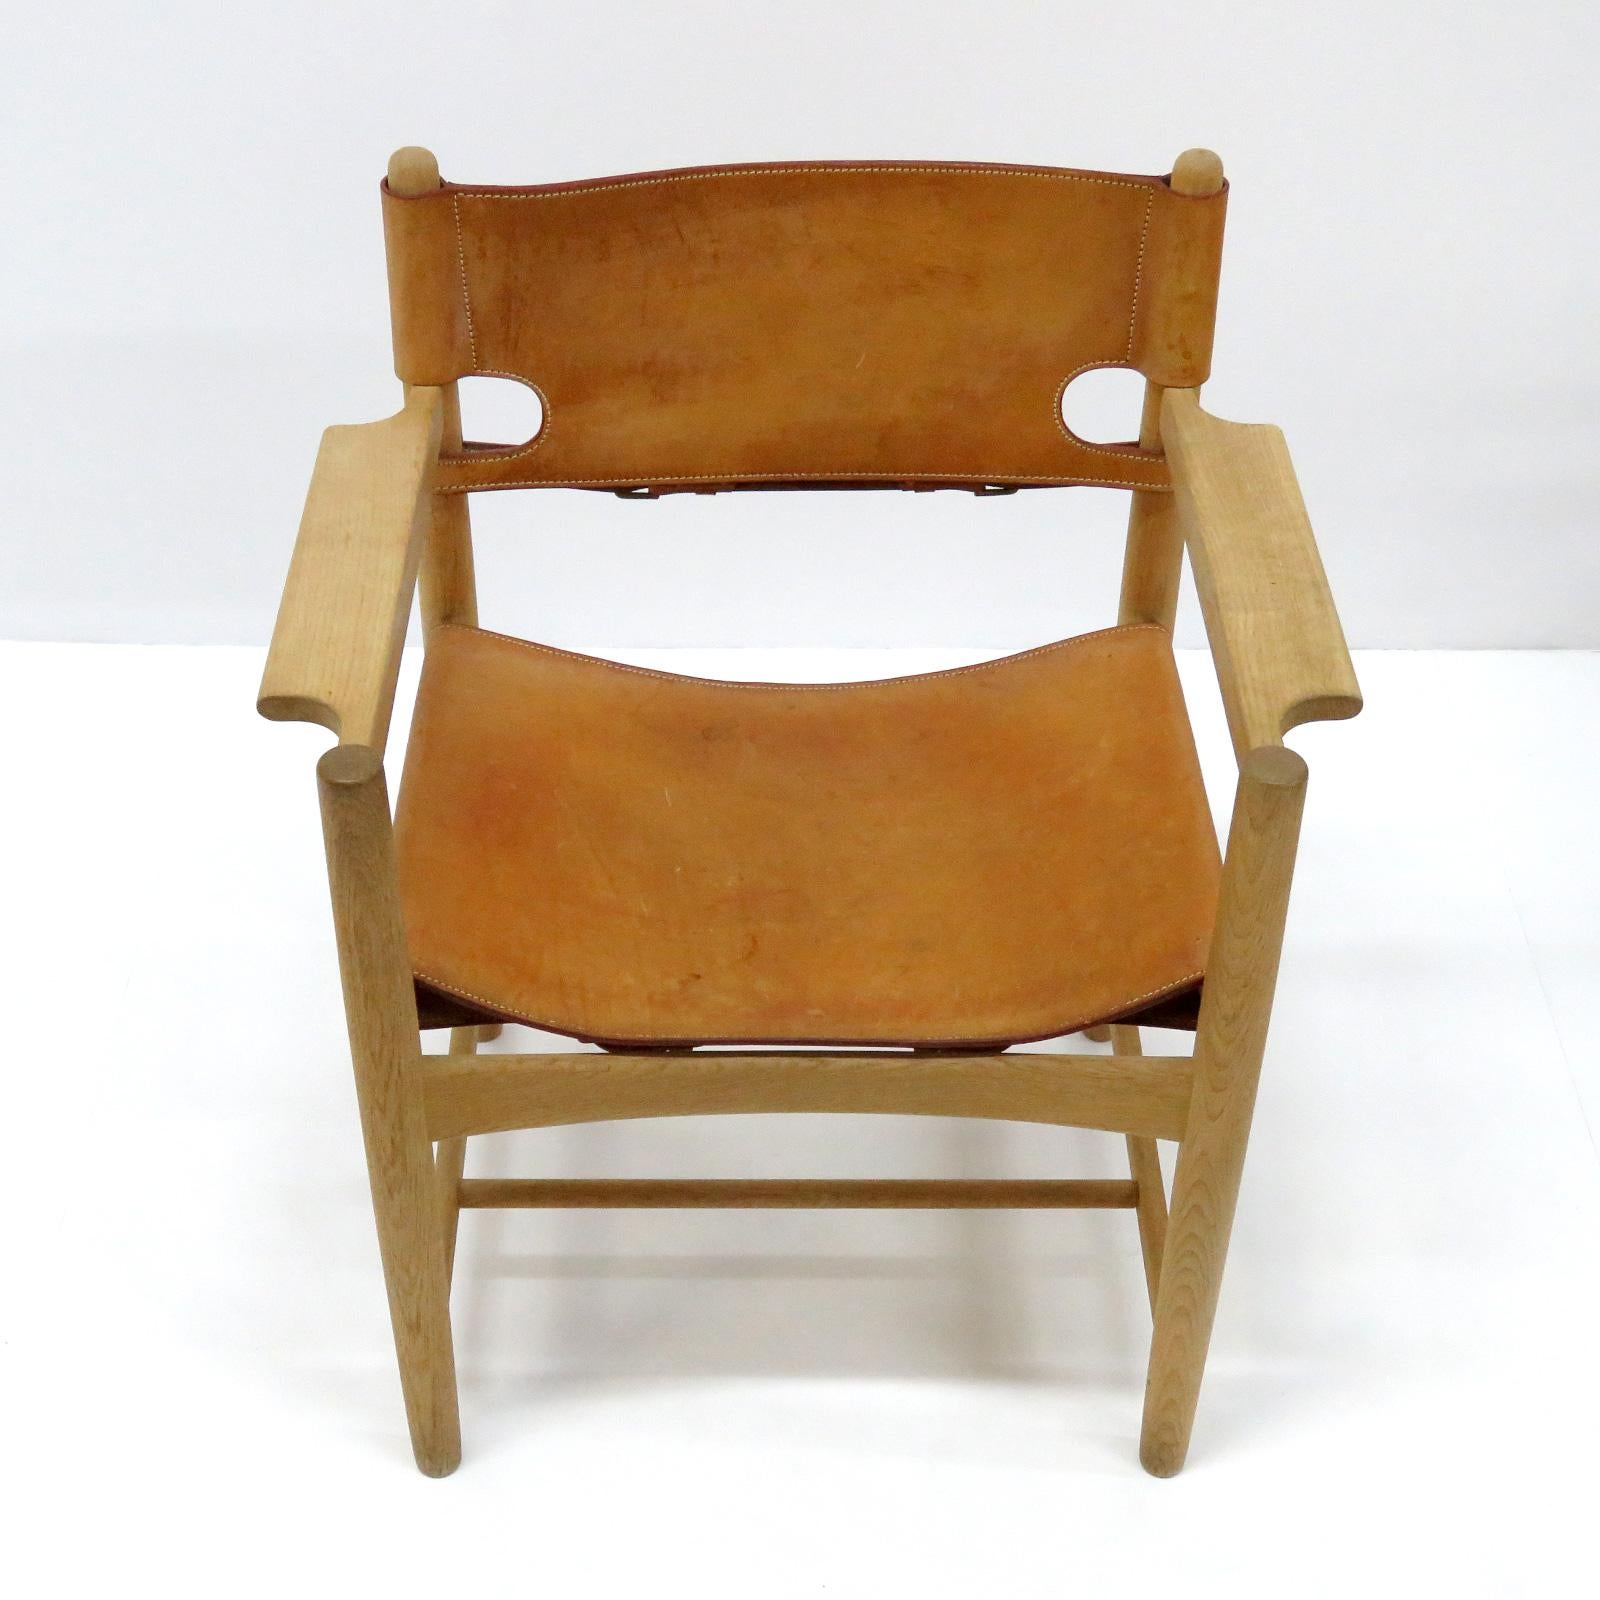 Børge Mogensen 'Hunting' Chairs, Model 3238 (Skandinavische Moderne)